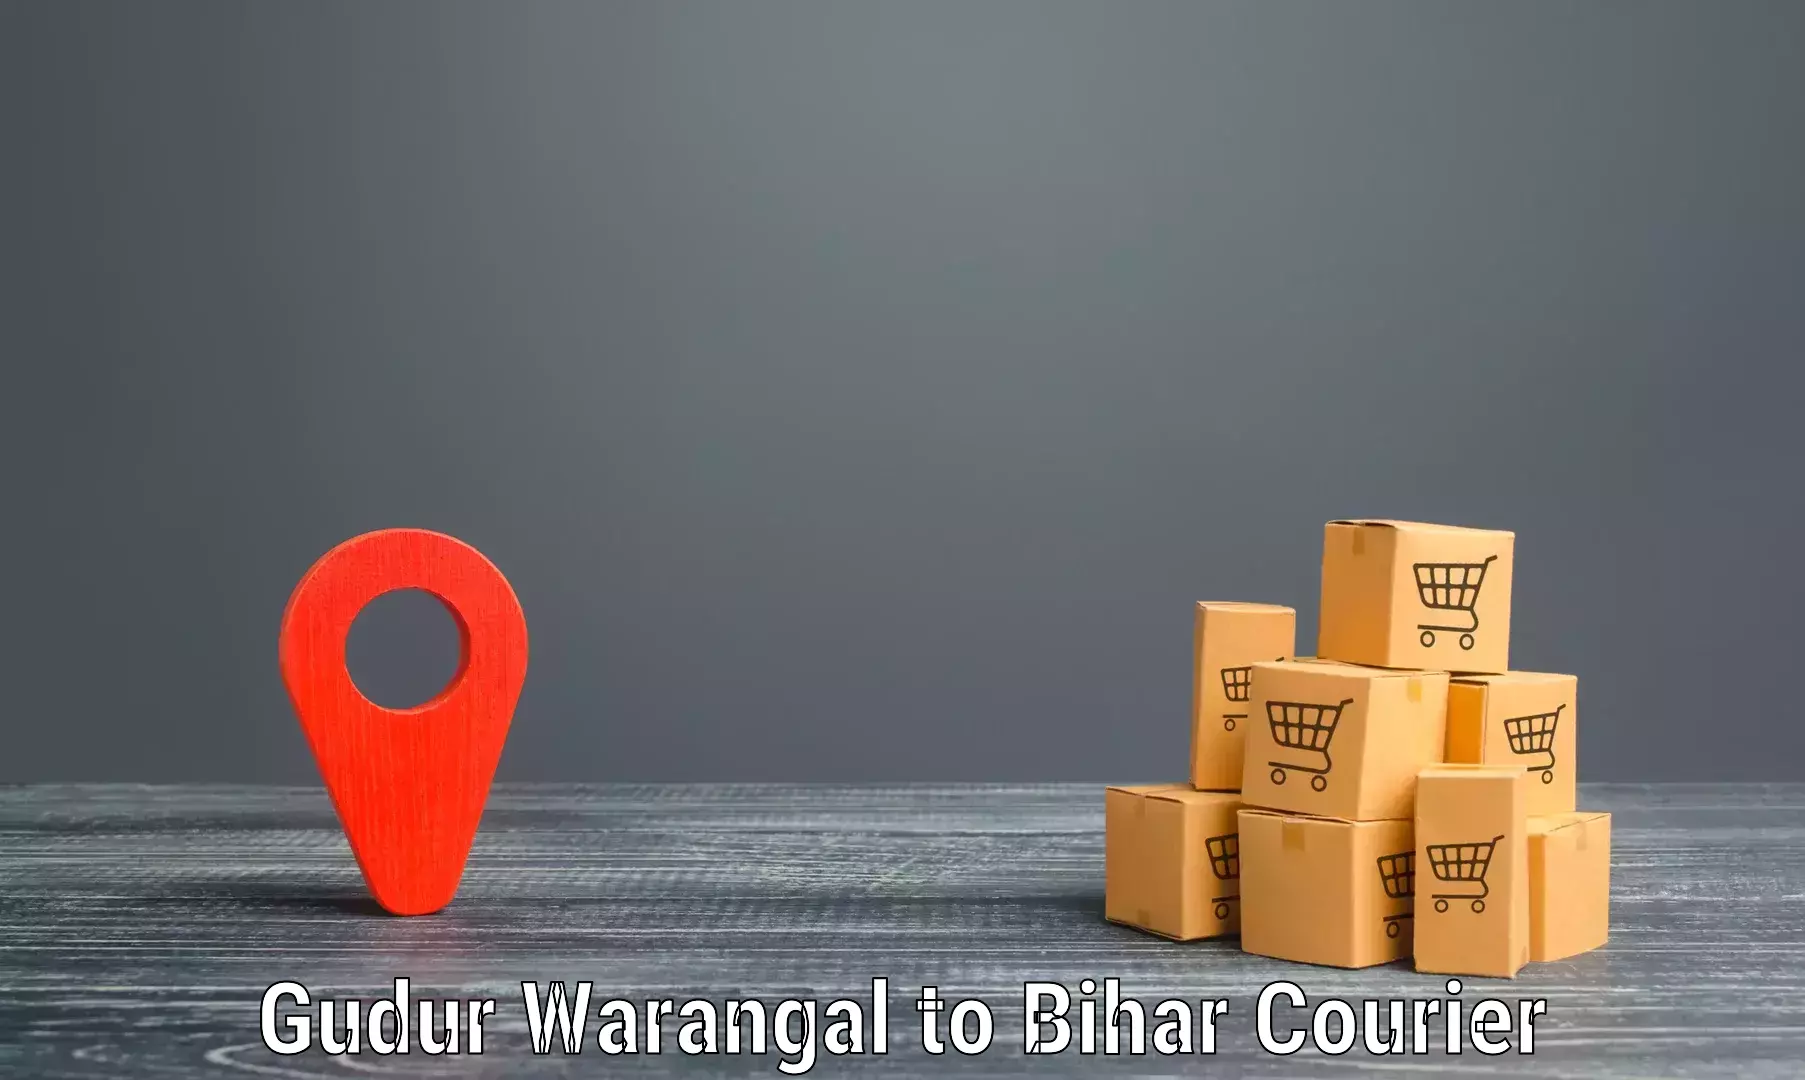 Comprehensive shipping network Gudur Warangal to Jaynagar